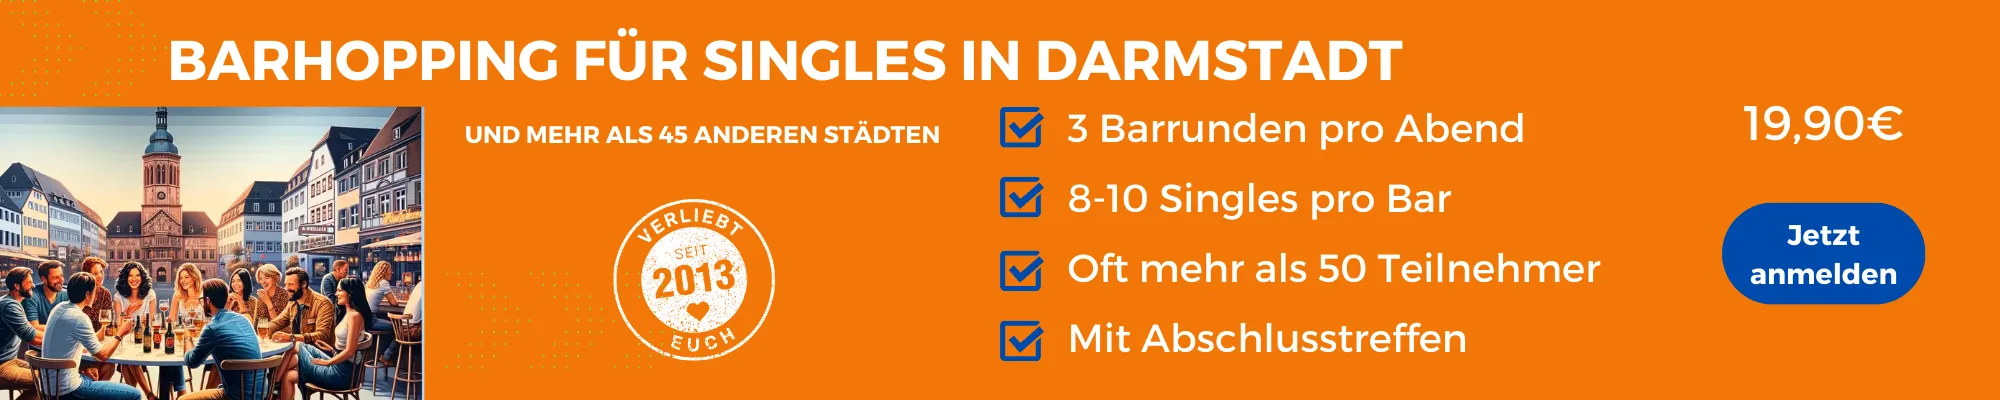 Face to Face Darmstadt: Barhopping für Singles in Darmstadt,